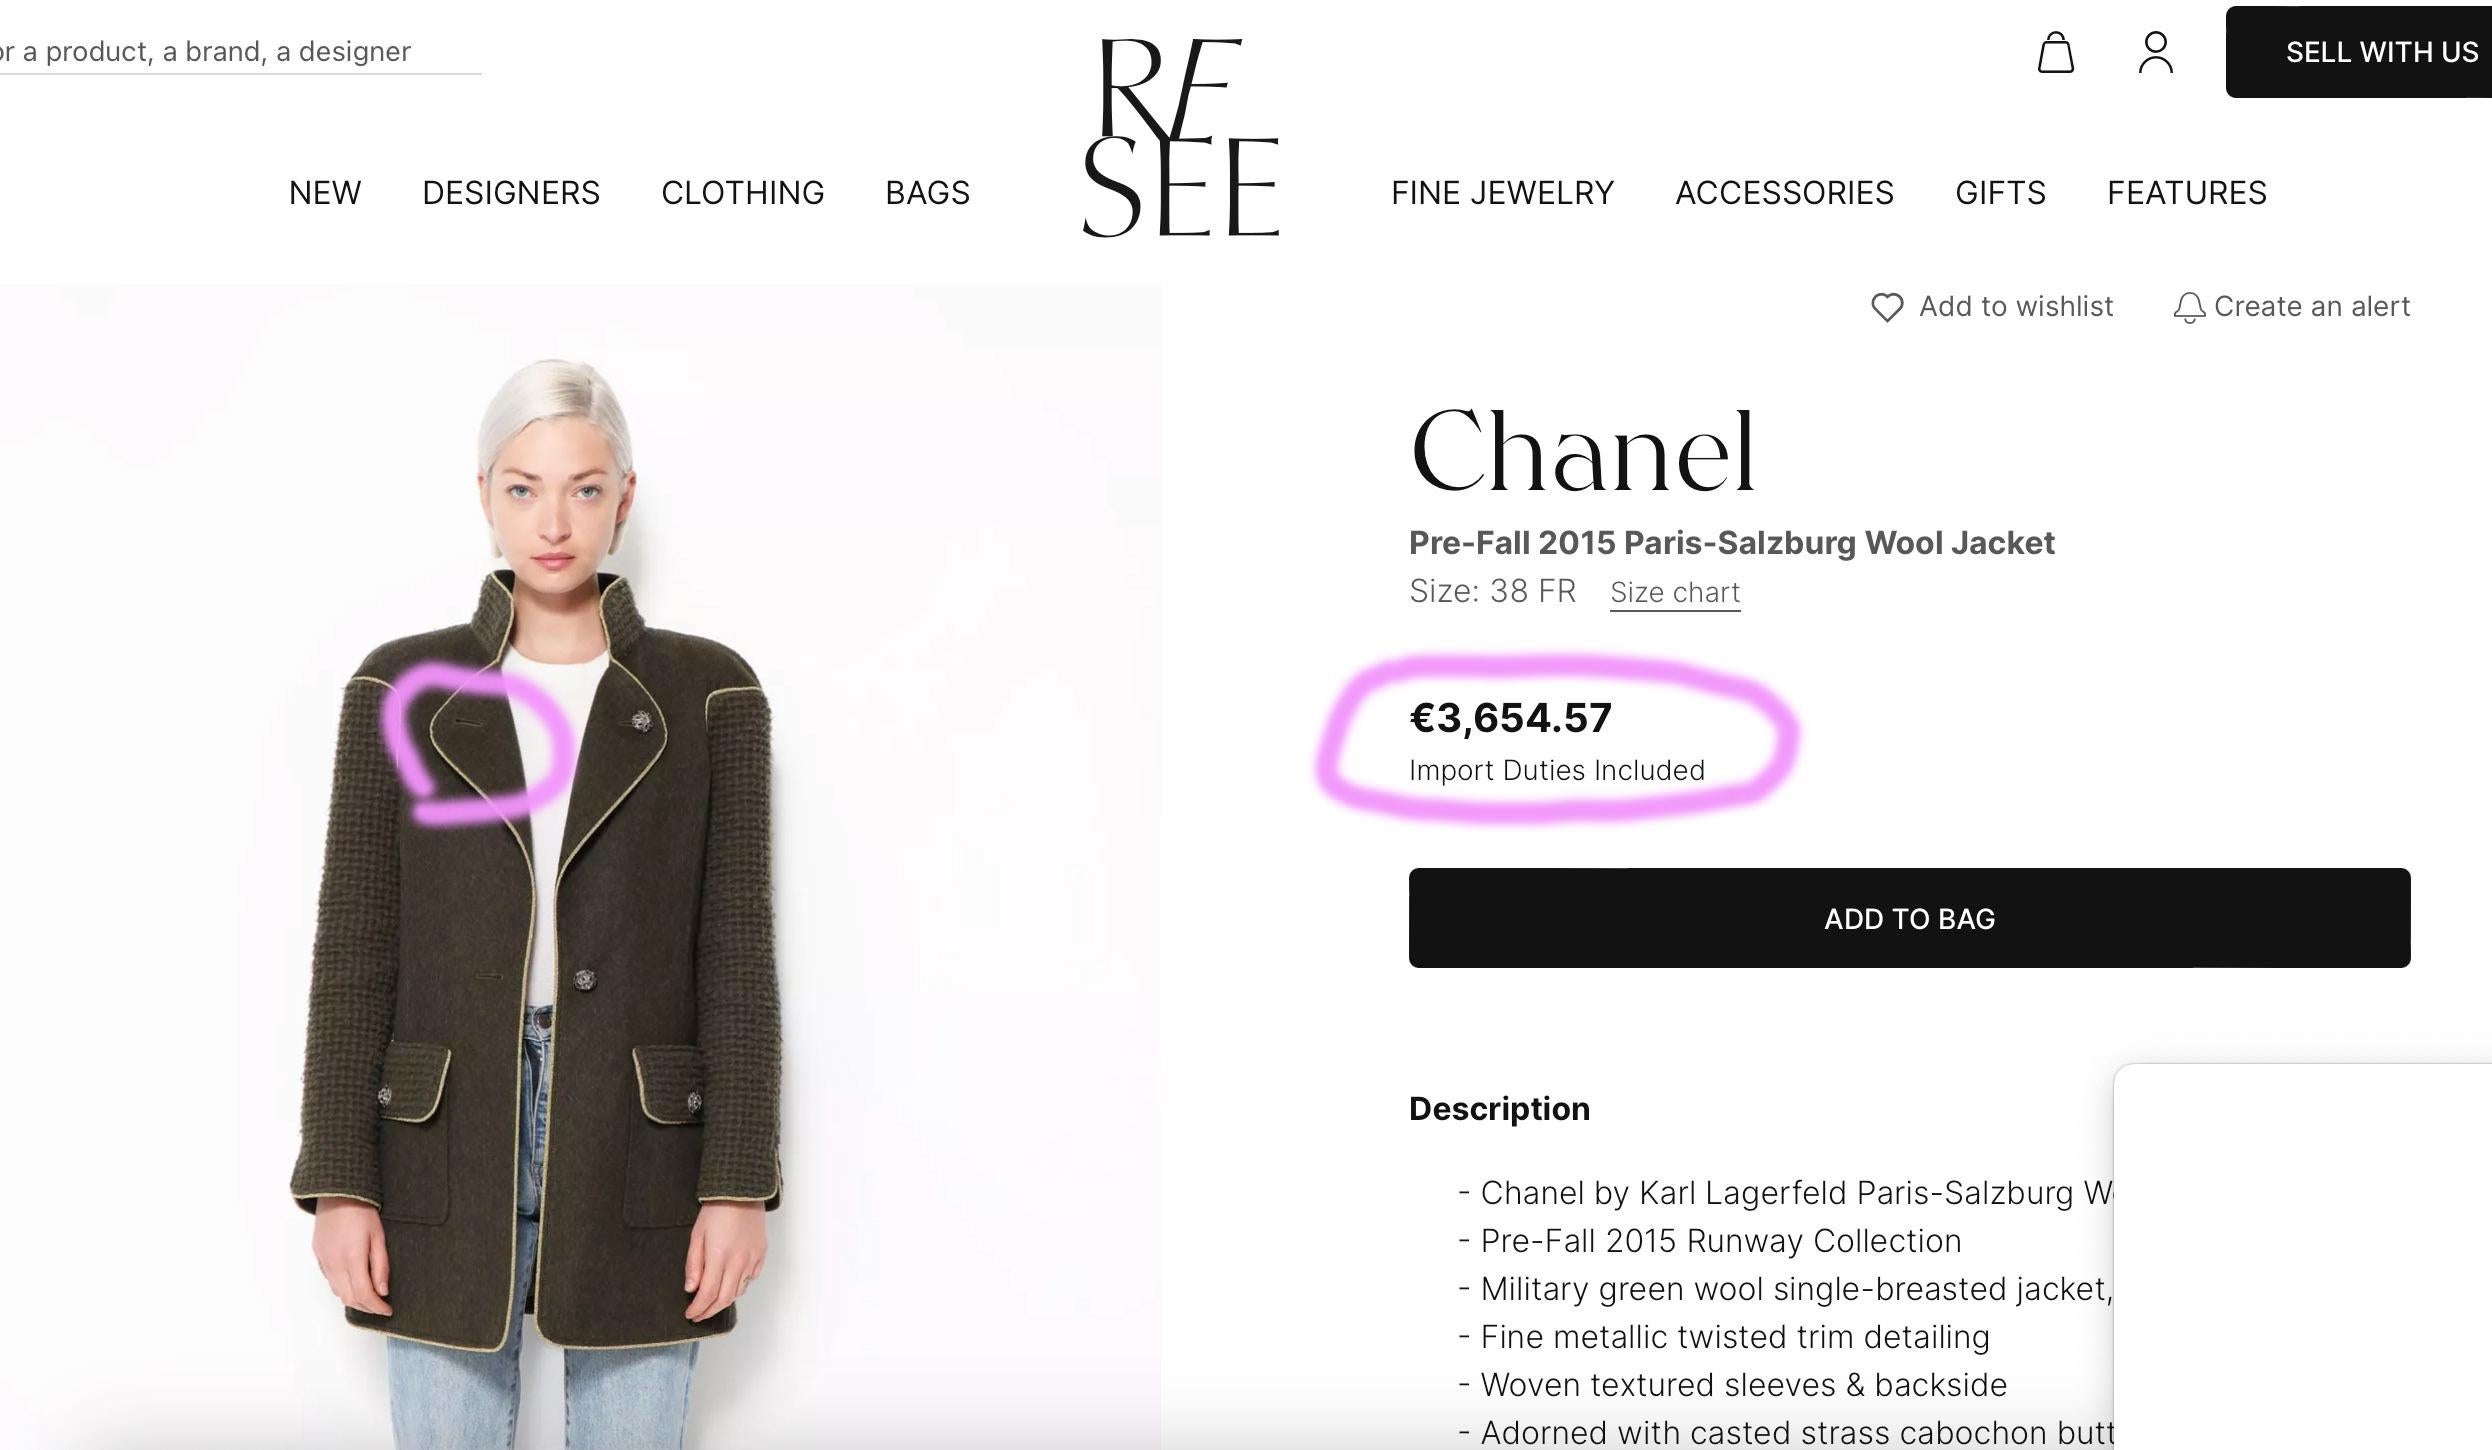 Women's or Men's Chanel New Kris Jenner Runway Jewel Buttons Tweed Jacket For Sale